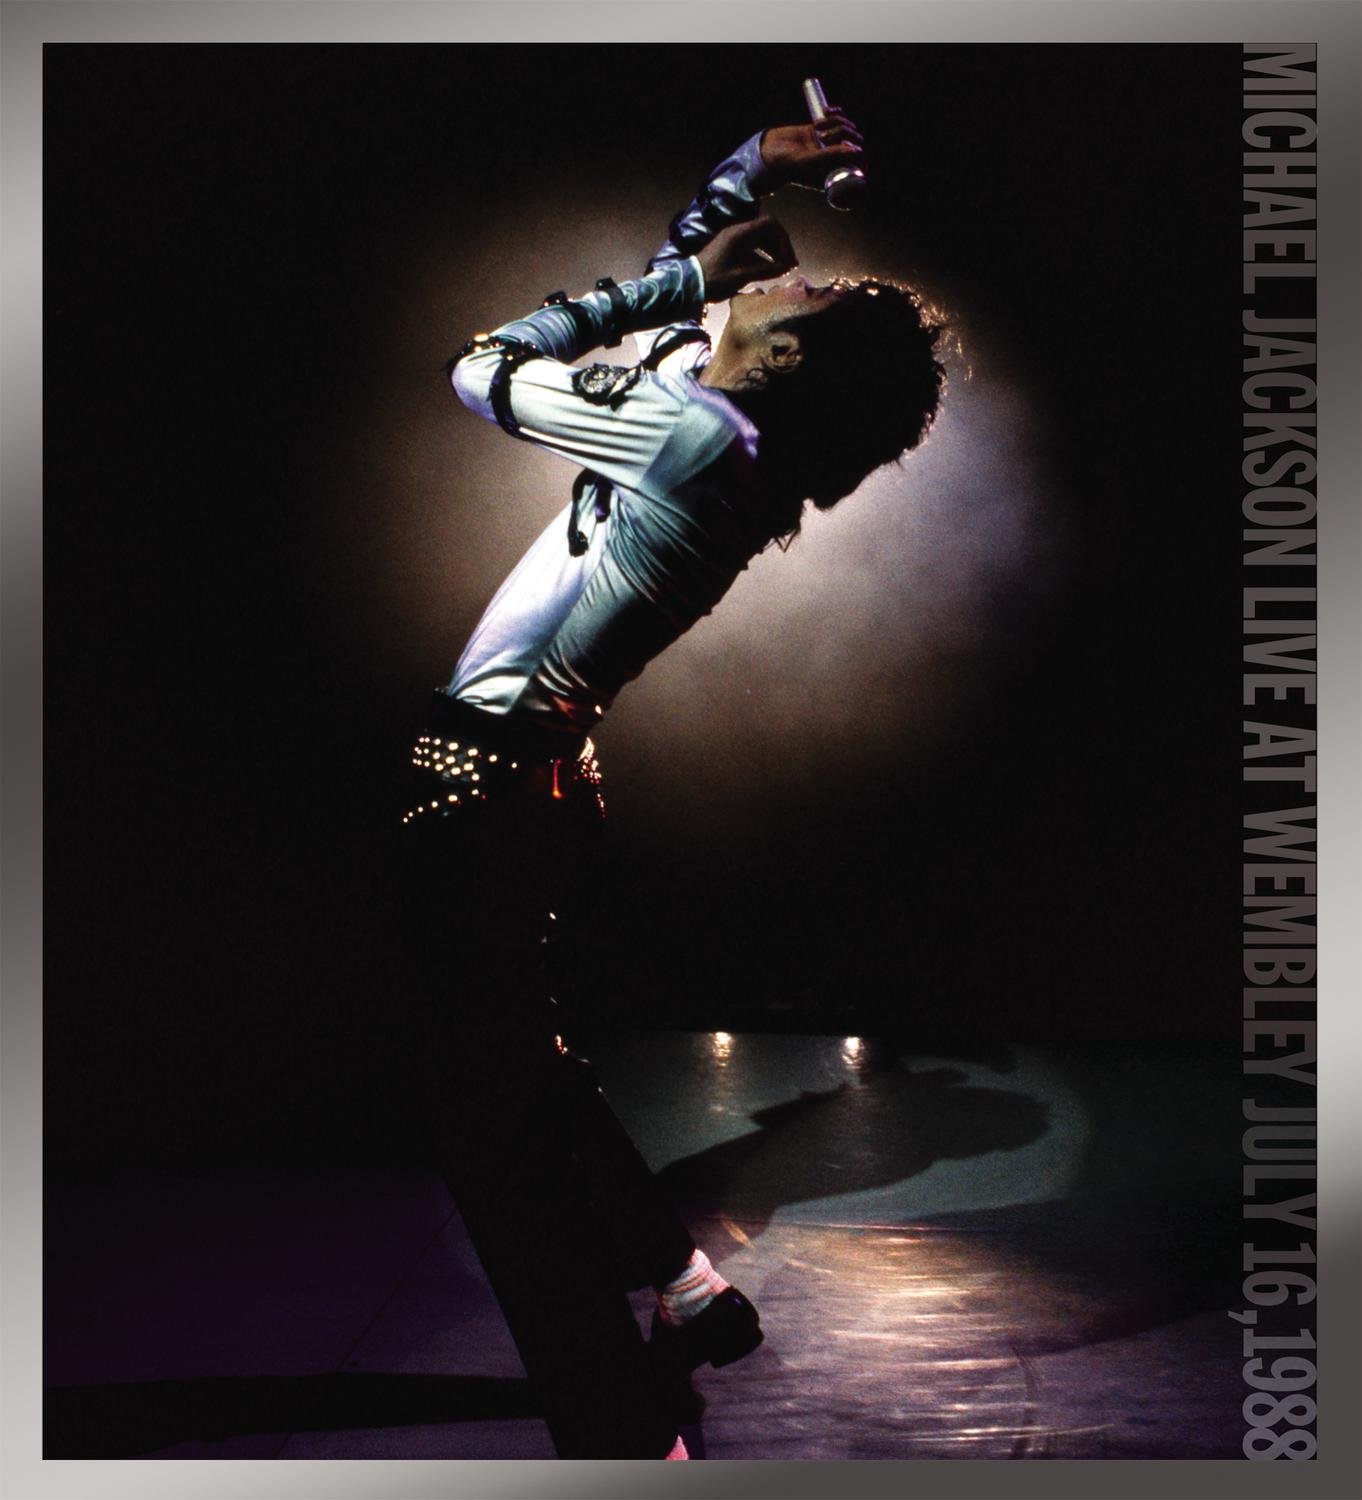 Michael jackson live. Michael Jackson Live Wembley 1988. Michael Jackson - Live at Wembley (July 16, 1988). Michael Jackson Bad Tour 1988.